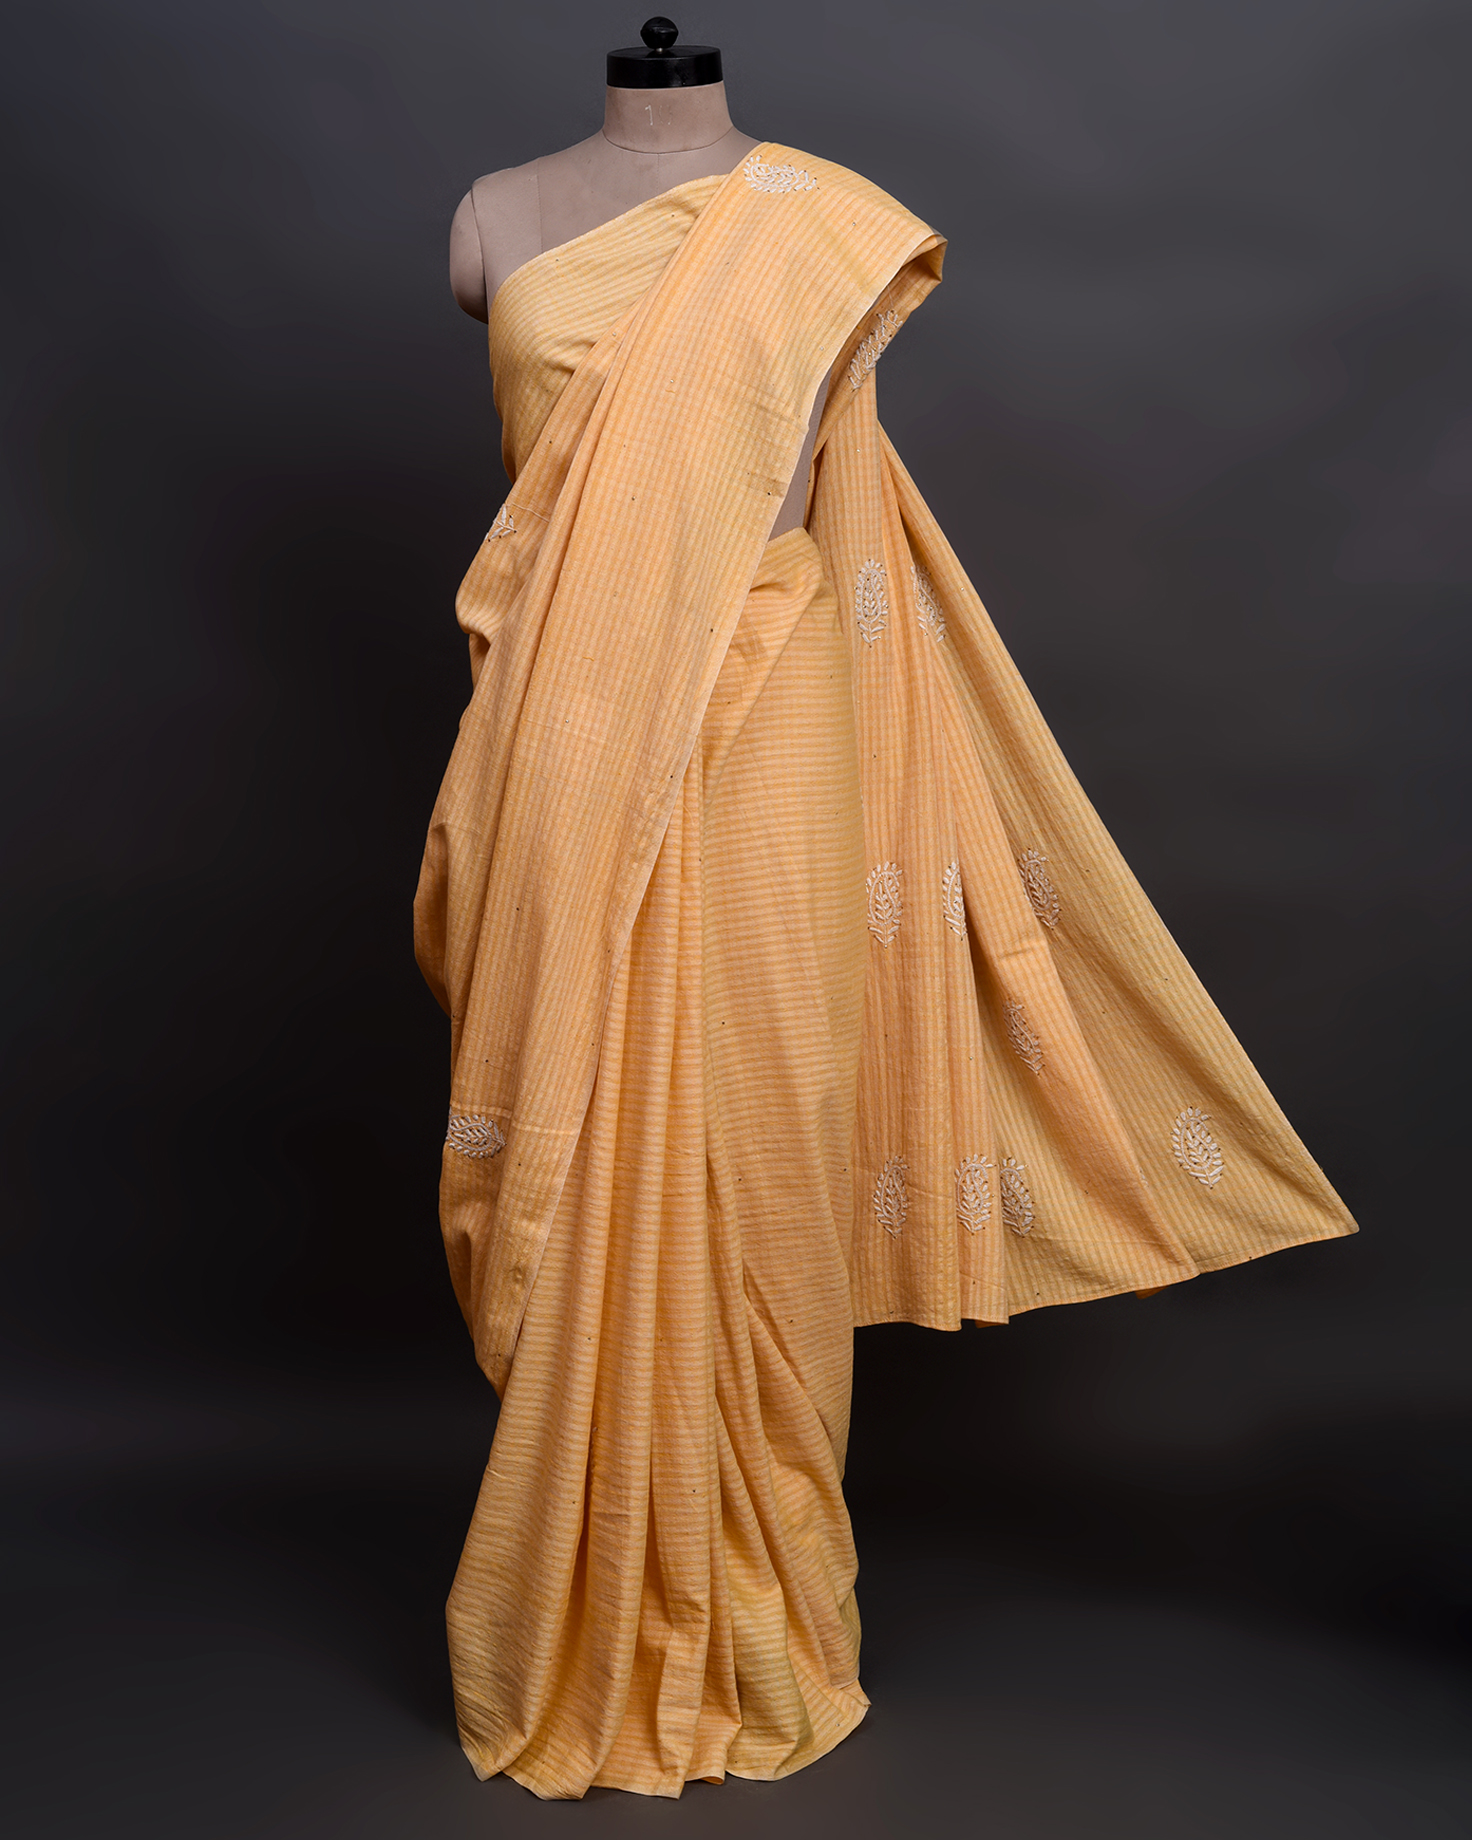 handlooom sari with Lucknowi chikankari embroidery handmade yellow saree